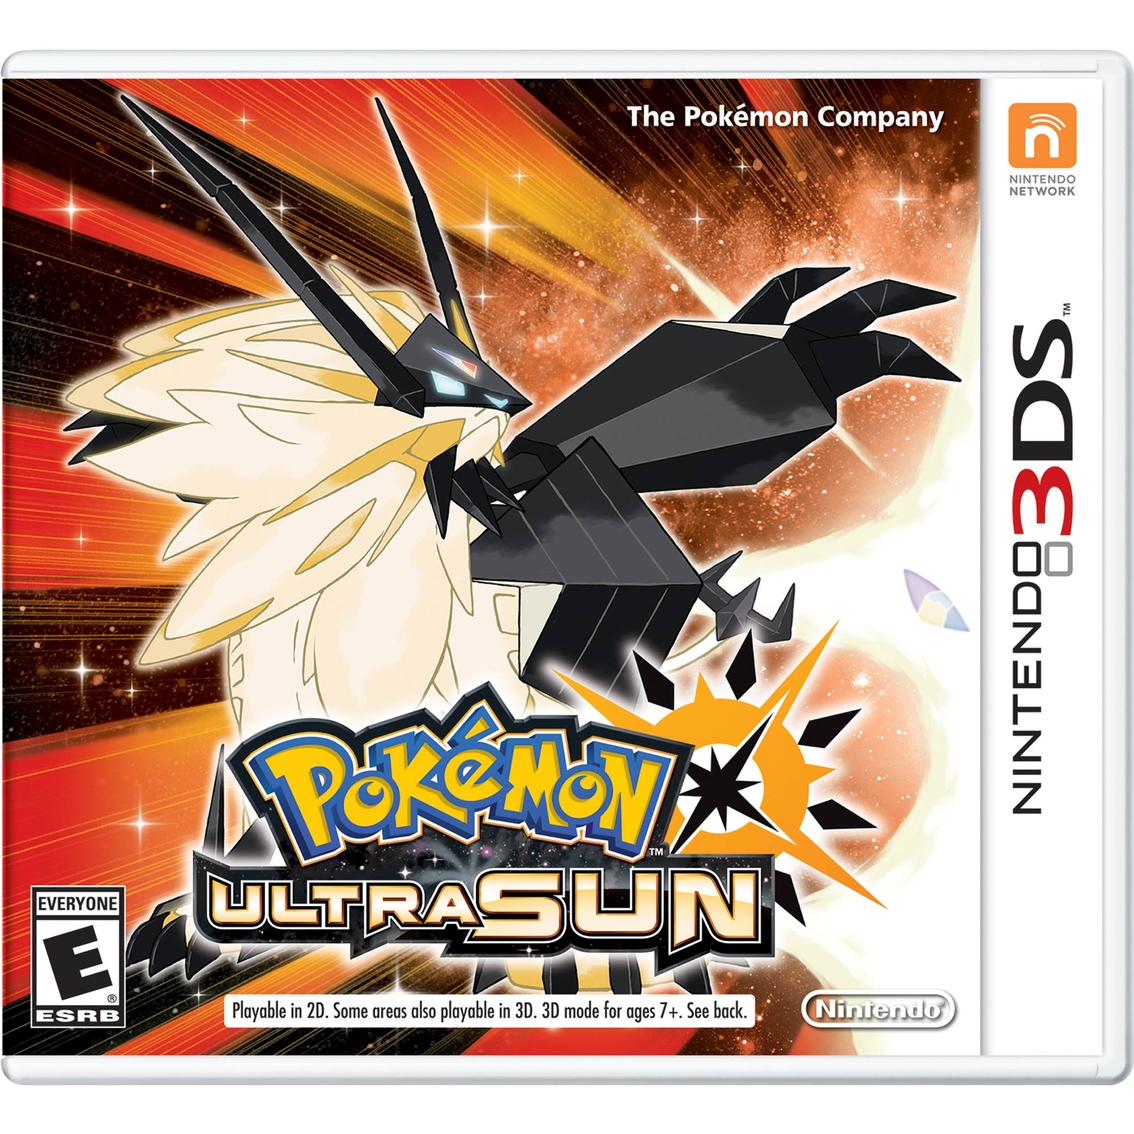 Promotional item Pokémon Ultra Sun Ultra Moon Pin Badge Brand New